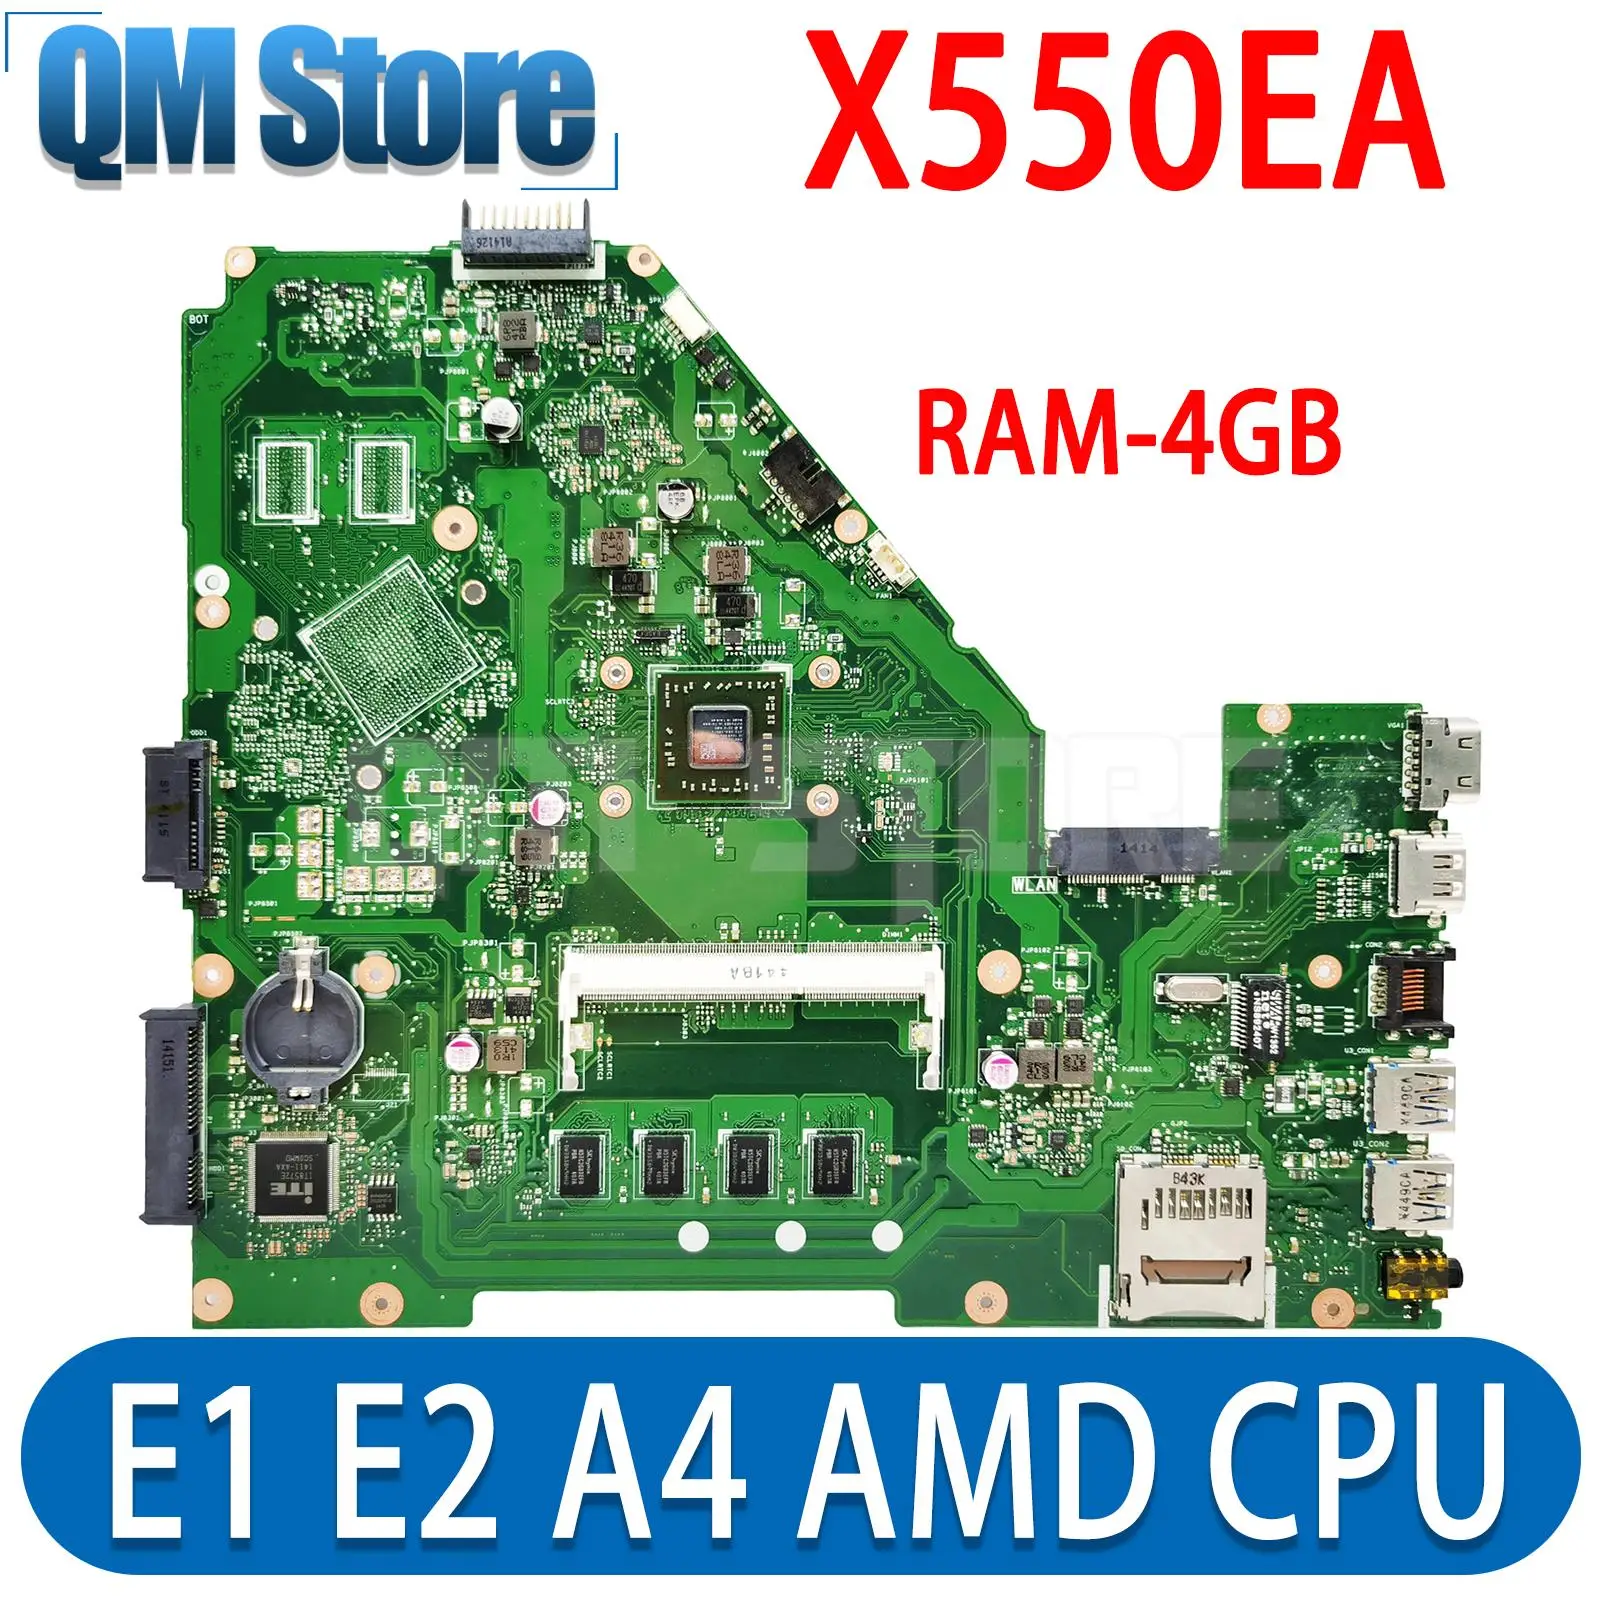 

X550EA Notebook Mainboard E1 E2 A4 AMD CPU For ASUS X550 X550E D552E X552E X550EP Laptop Motherboard With RAM-4GB DDR3 UMA